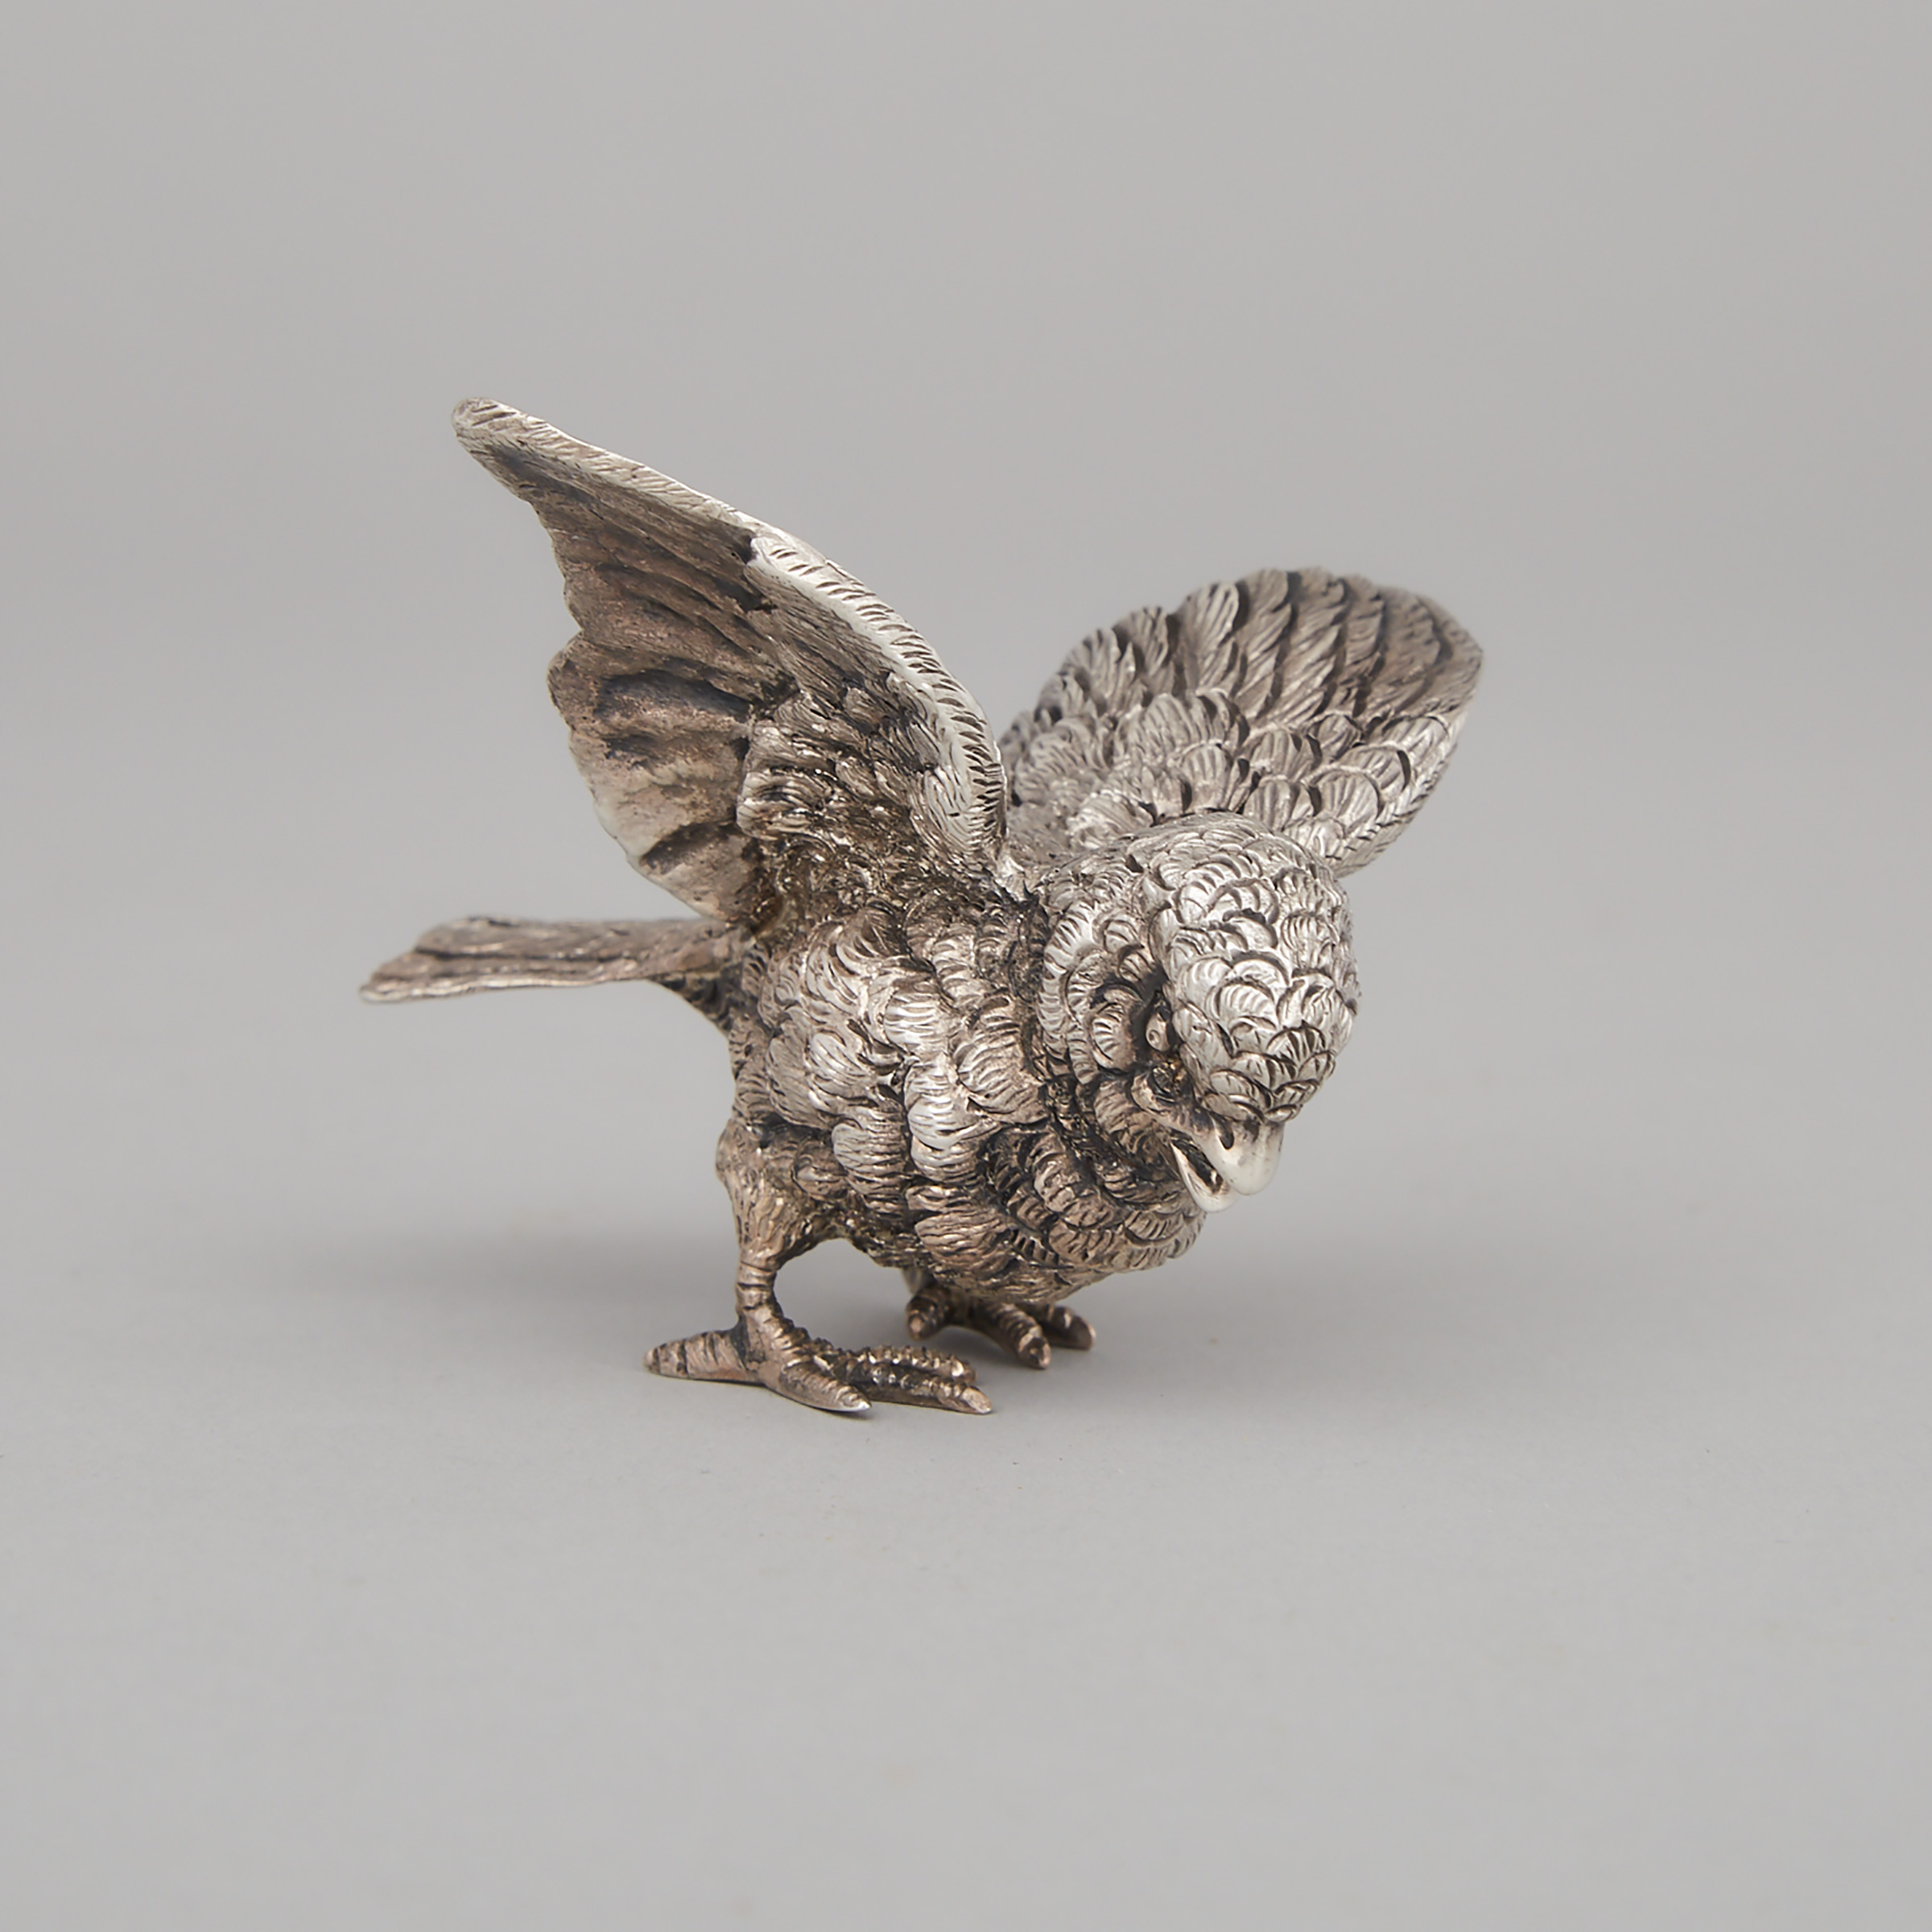 English Silver Model of a Sparrow, Francis Higgins & Sons Ltd., London, 1936